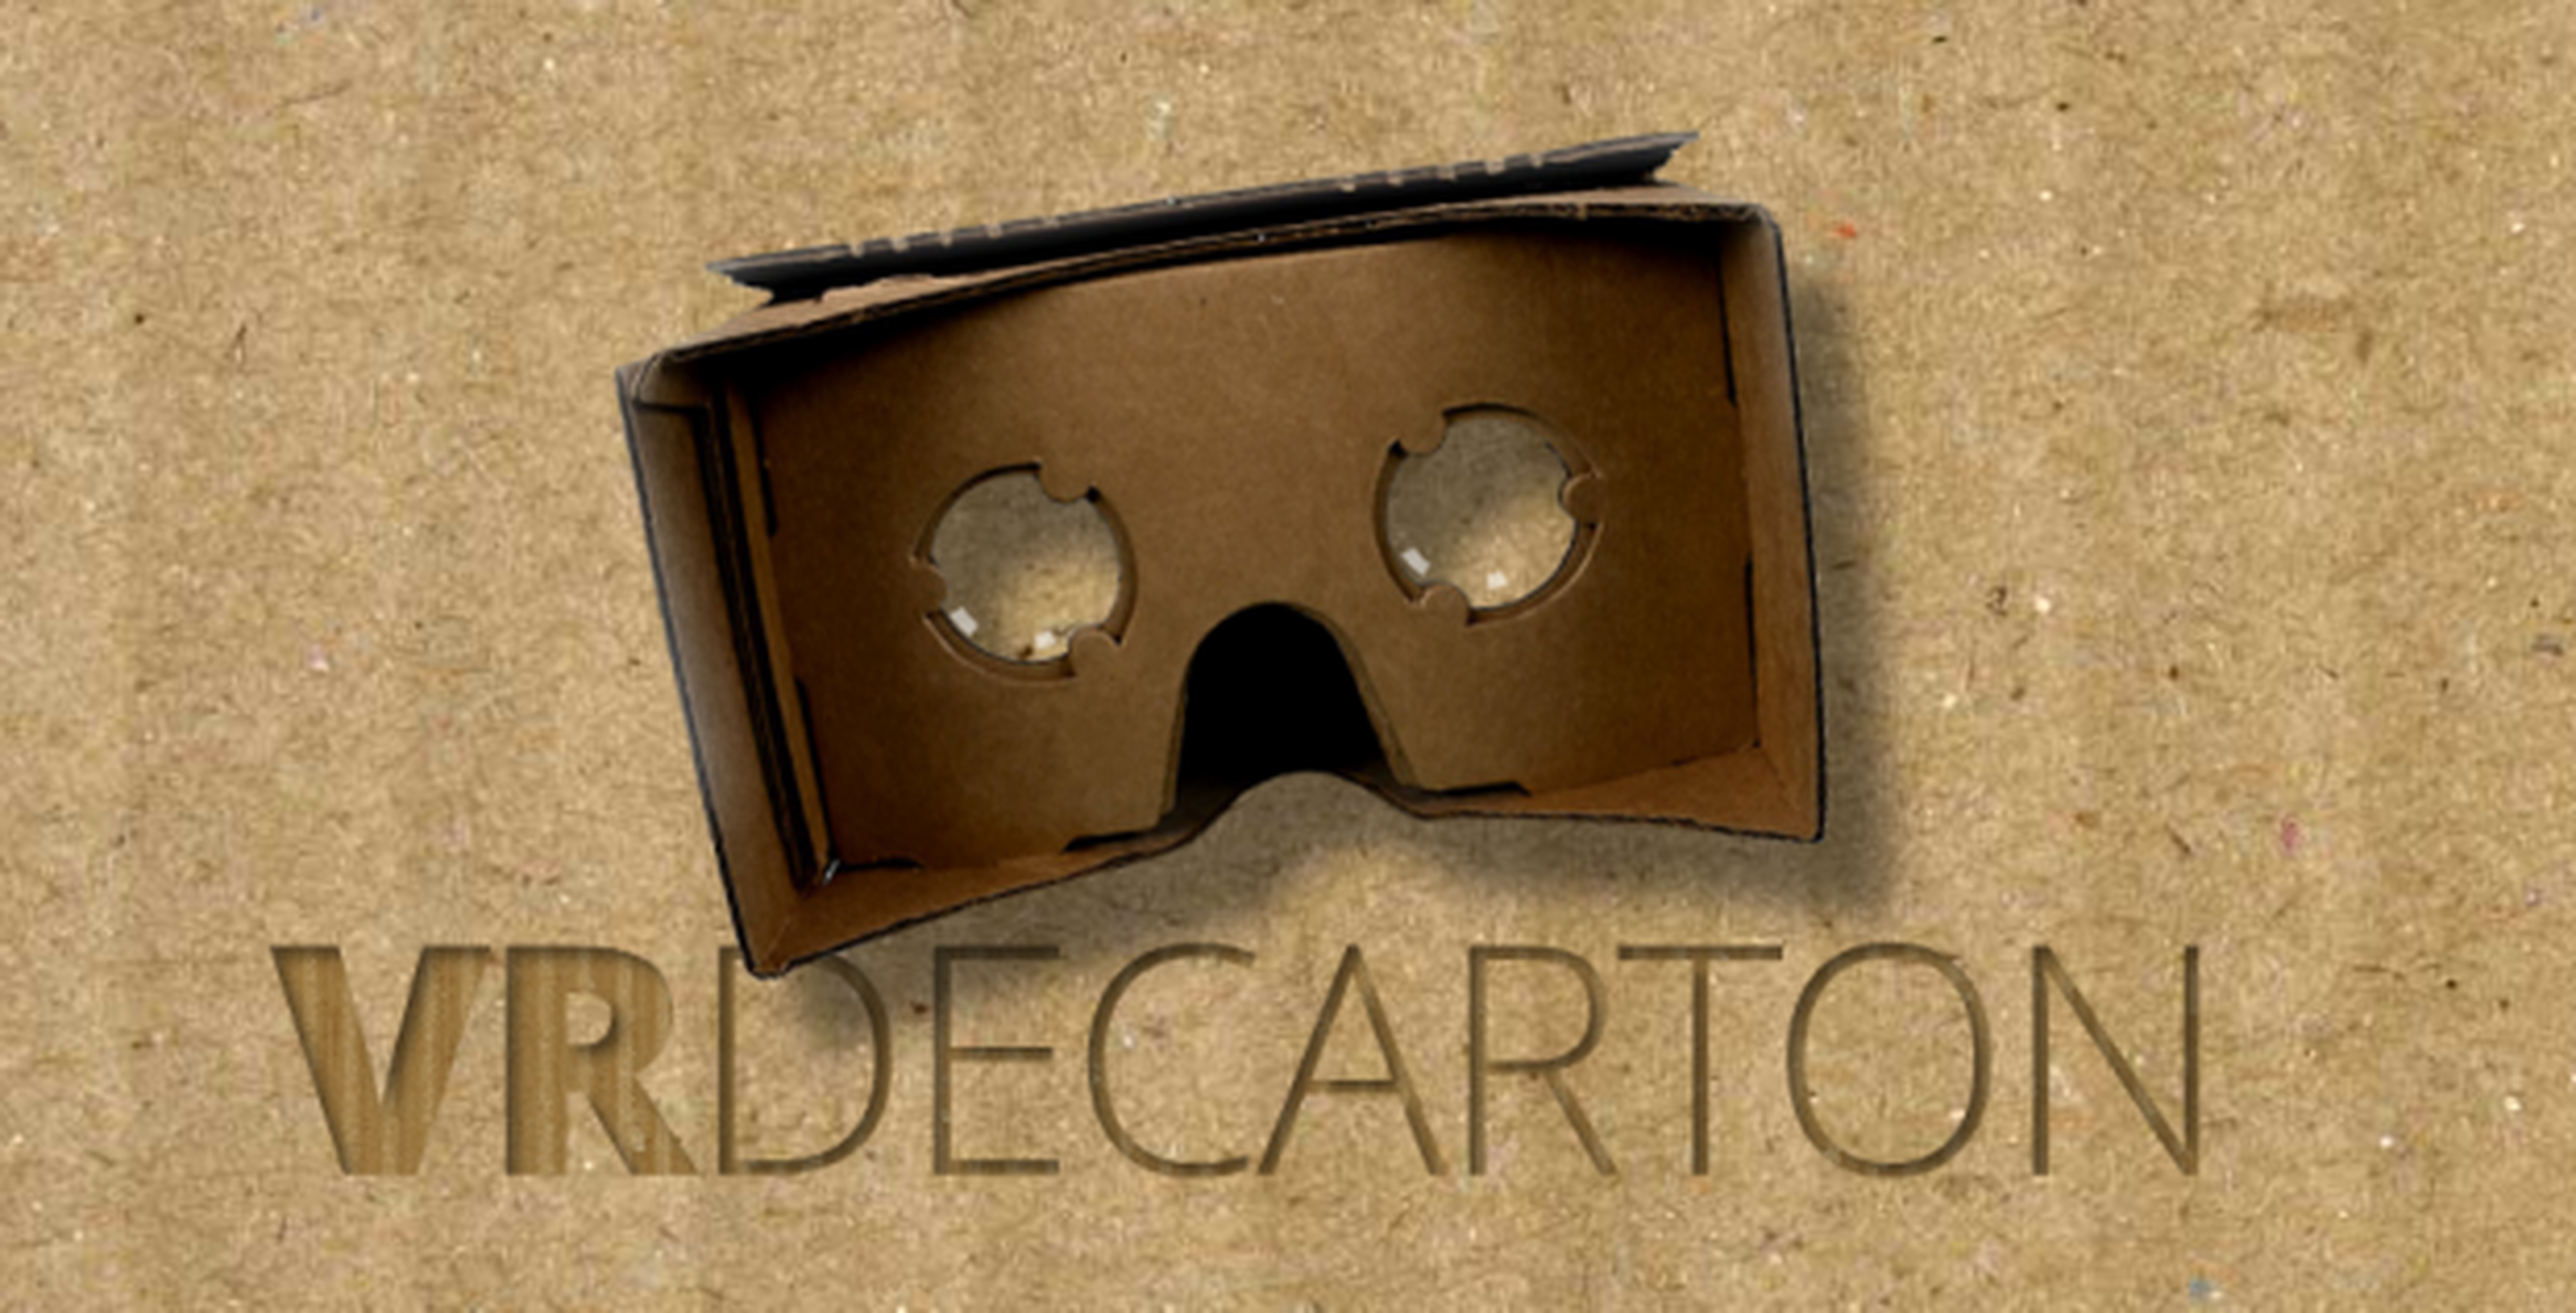 vrdecarton.es google cardboard